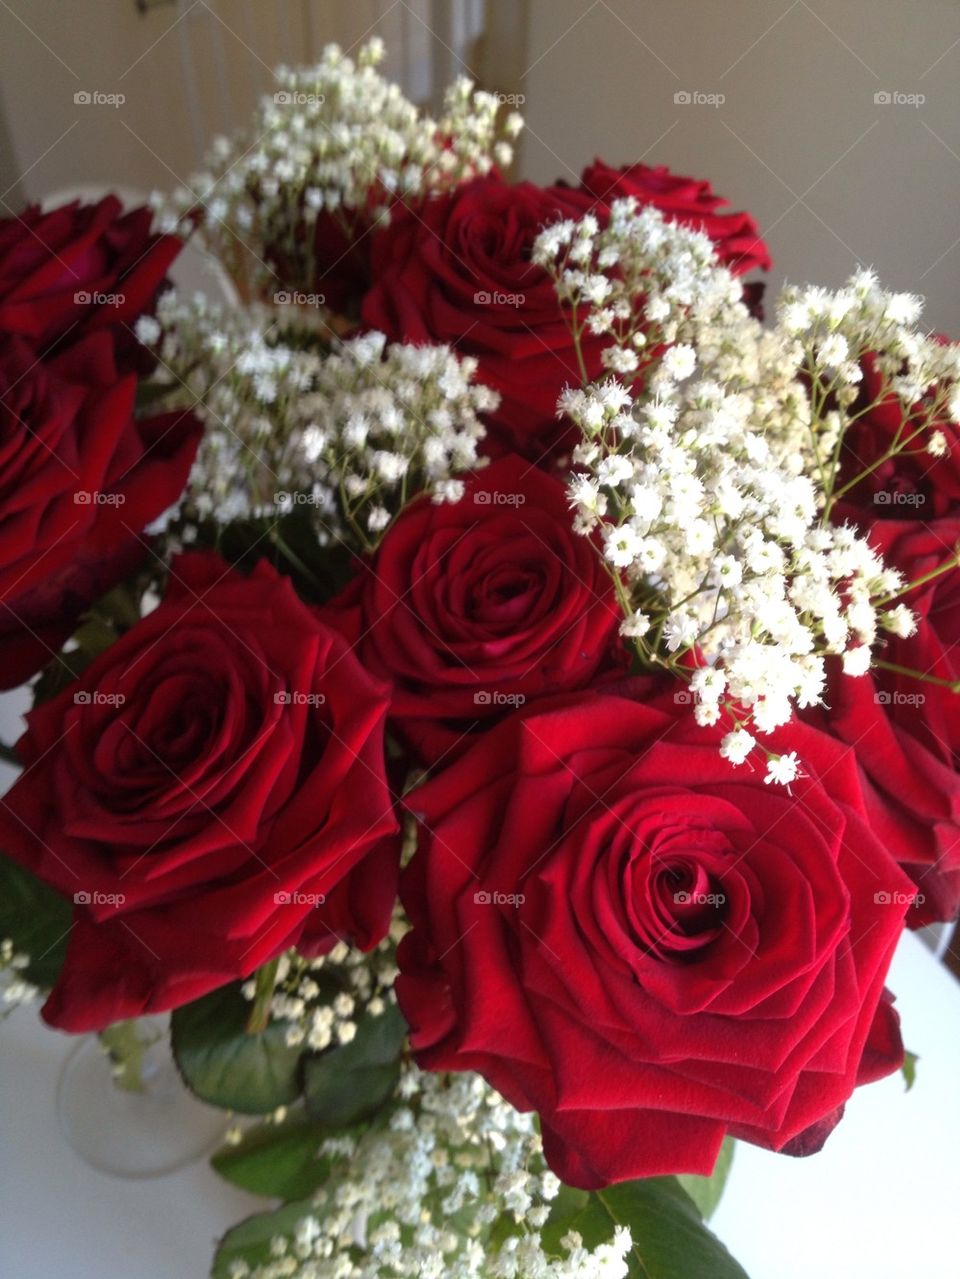 Roses for Love